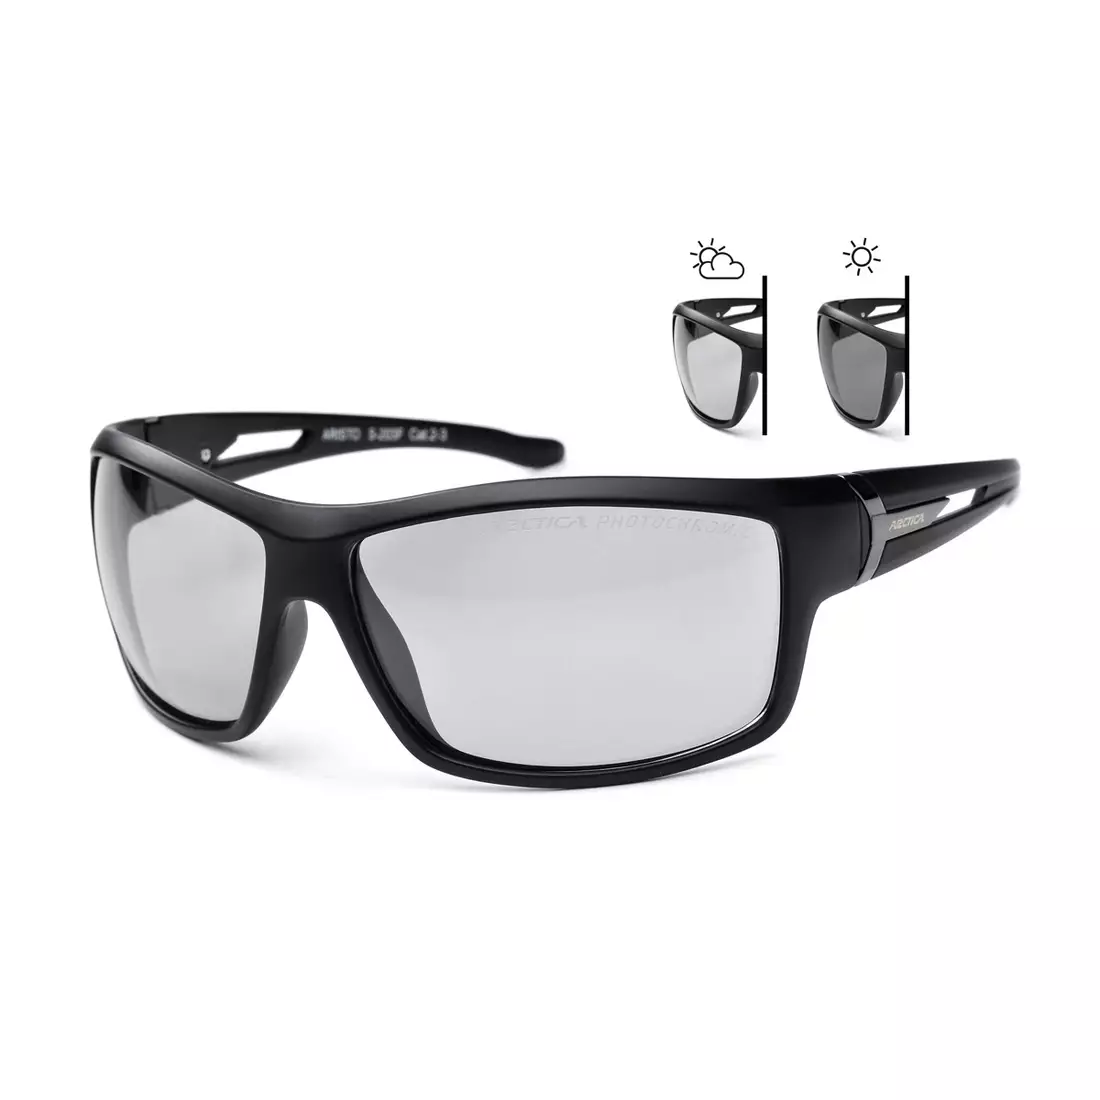 ARCTICA cycling/sports glasses, S 203 F